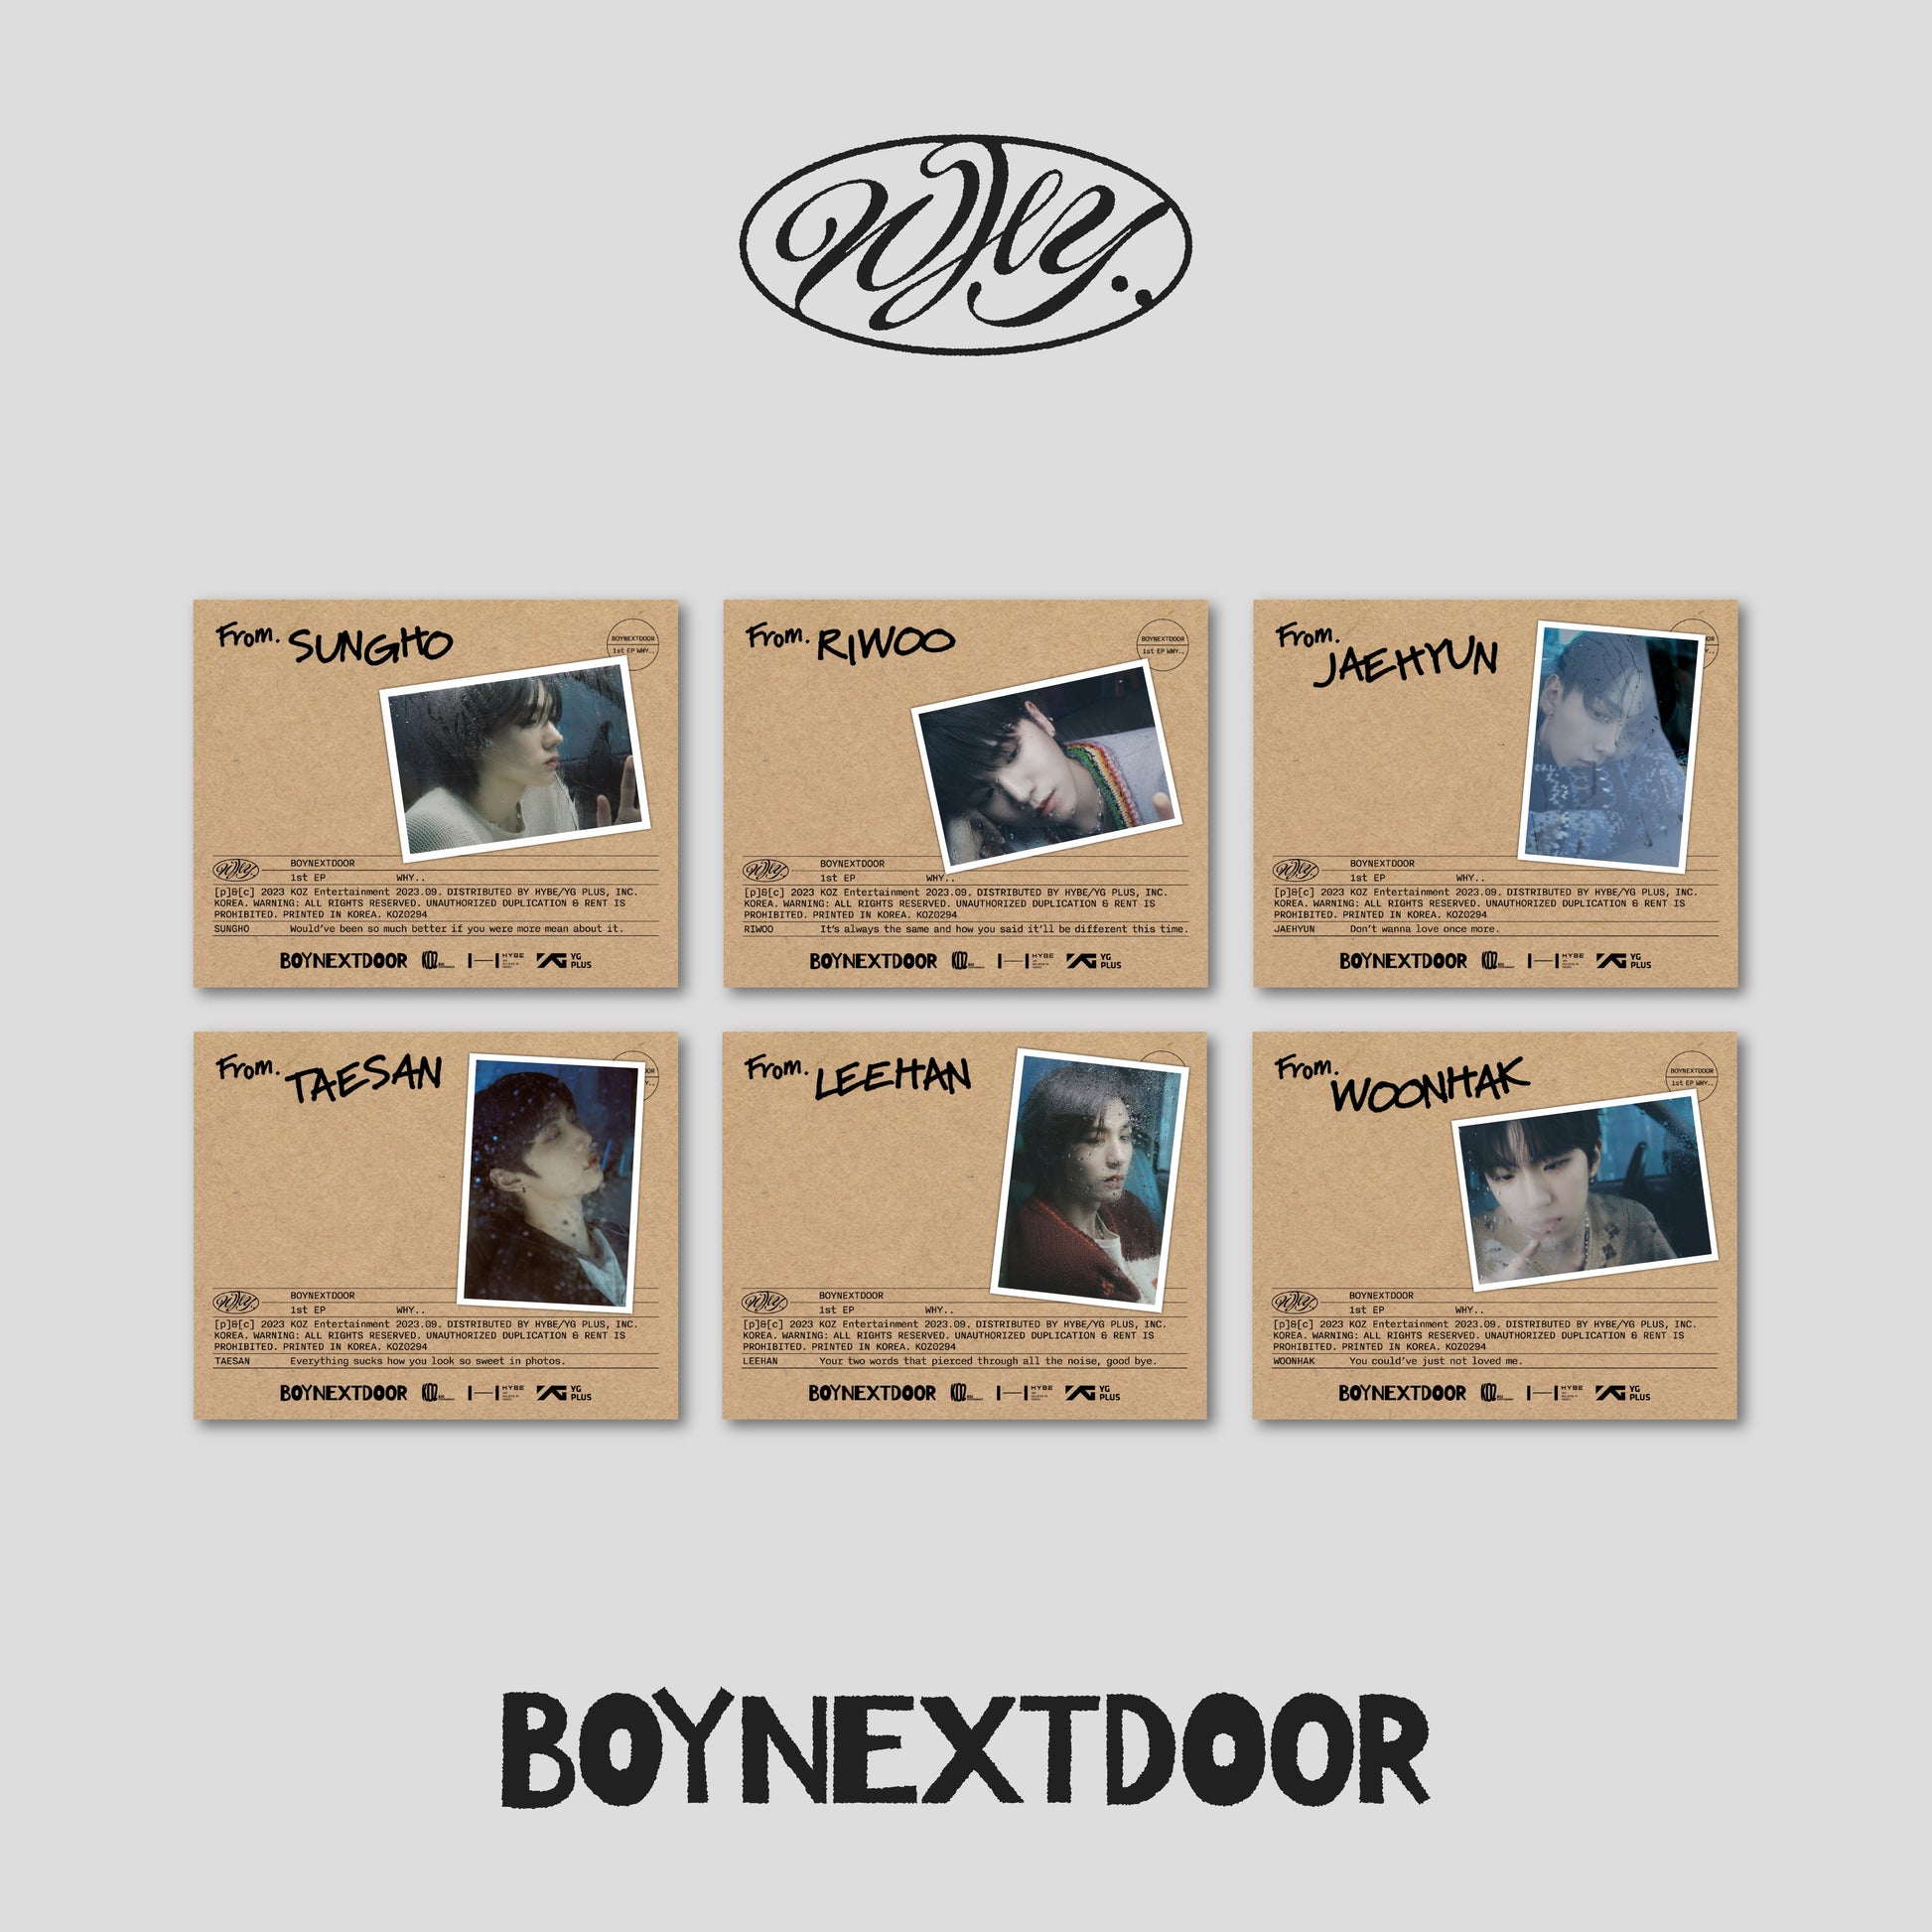 BOYNEXTDOOR 1ST EP ALBUM 'WHY..' (LETTER) COVER